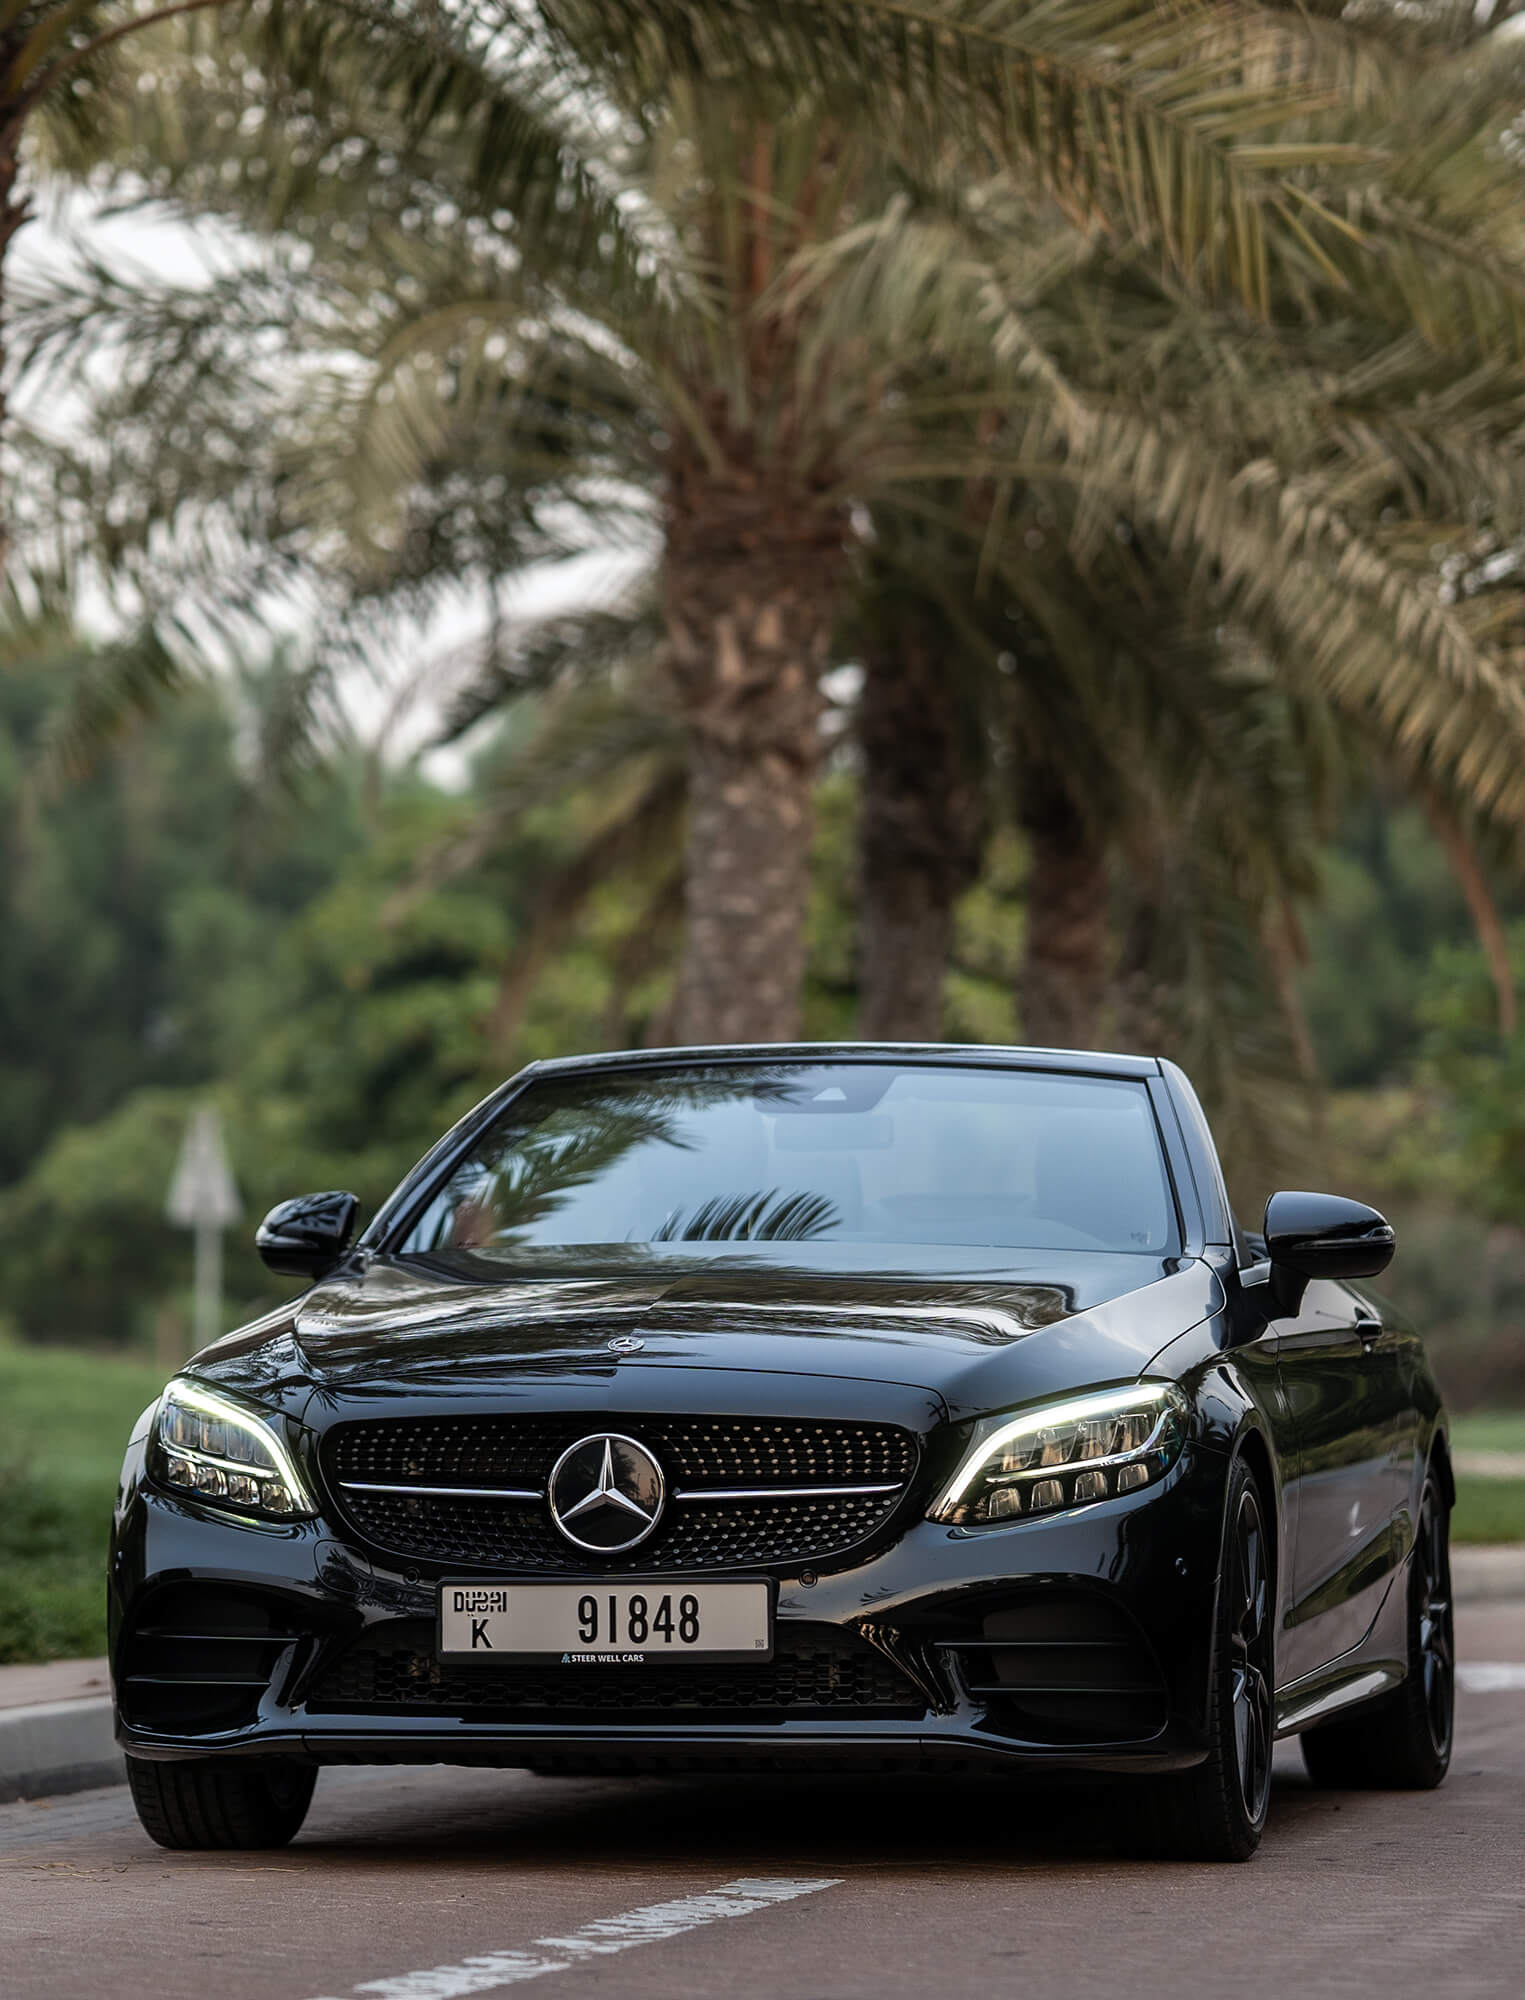 Lej Mercedes C-Klasse i Dubai